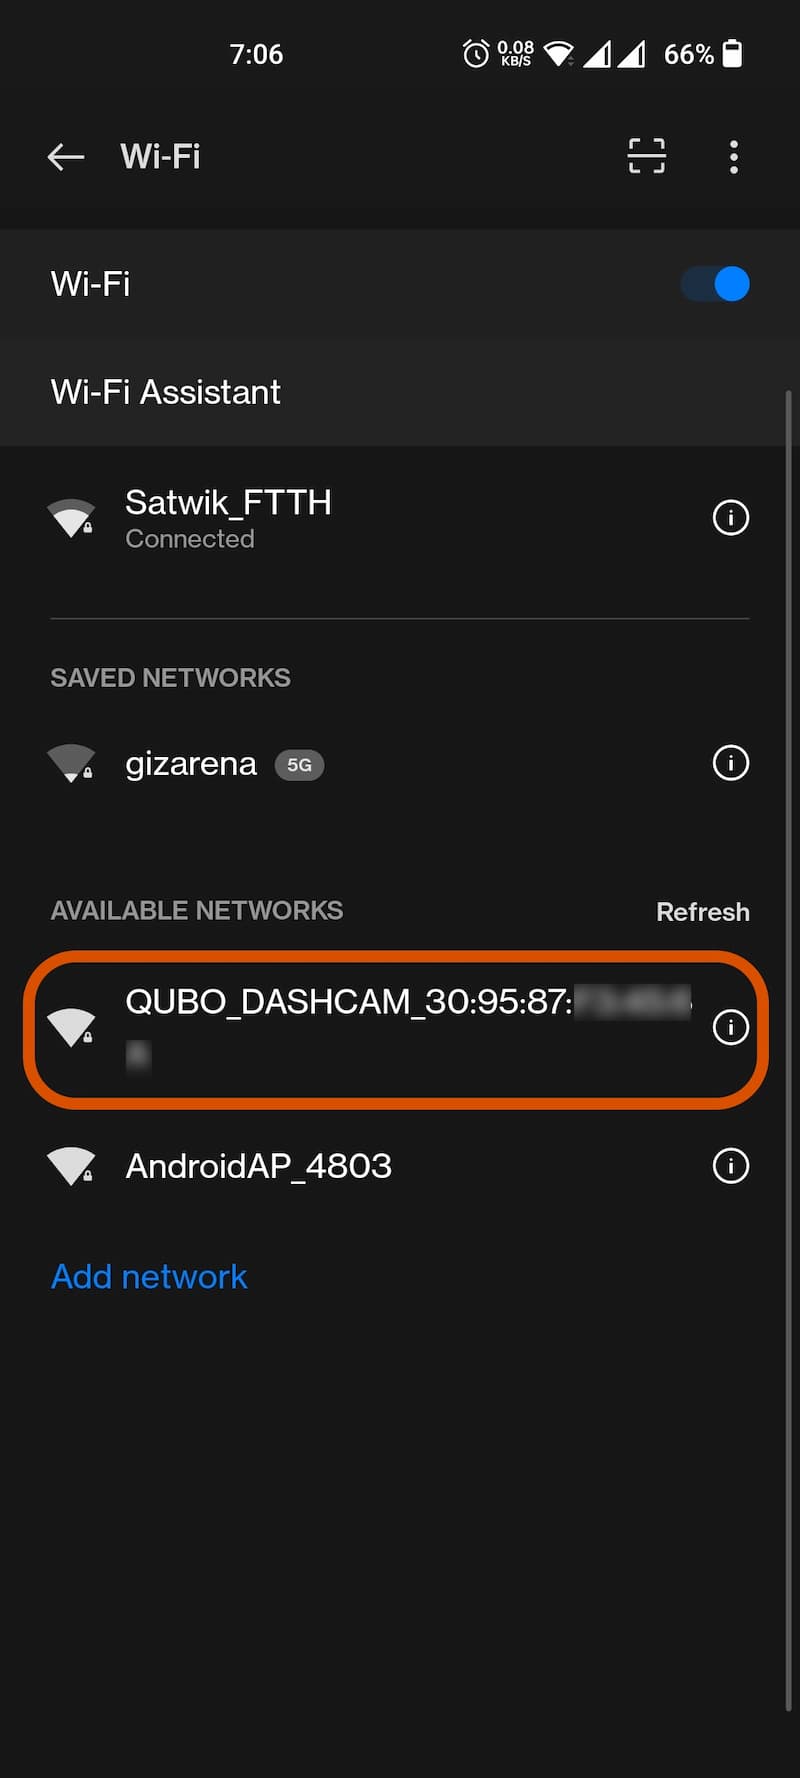 Qubo Dashcam Wi-Fi Settings